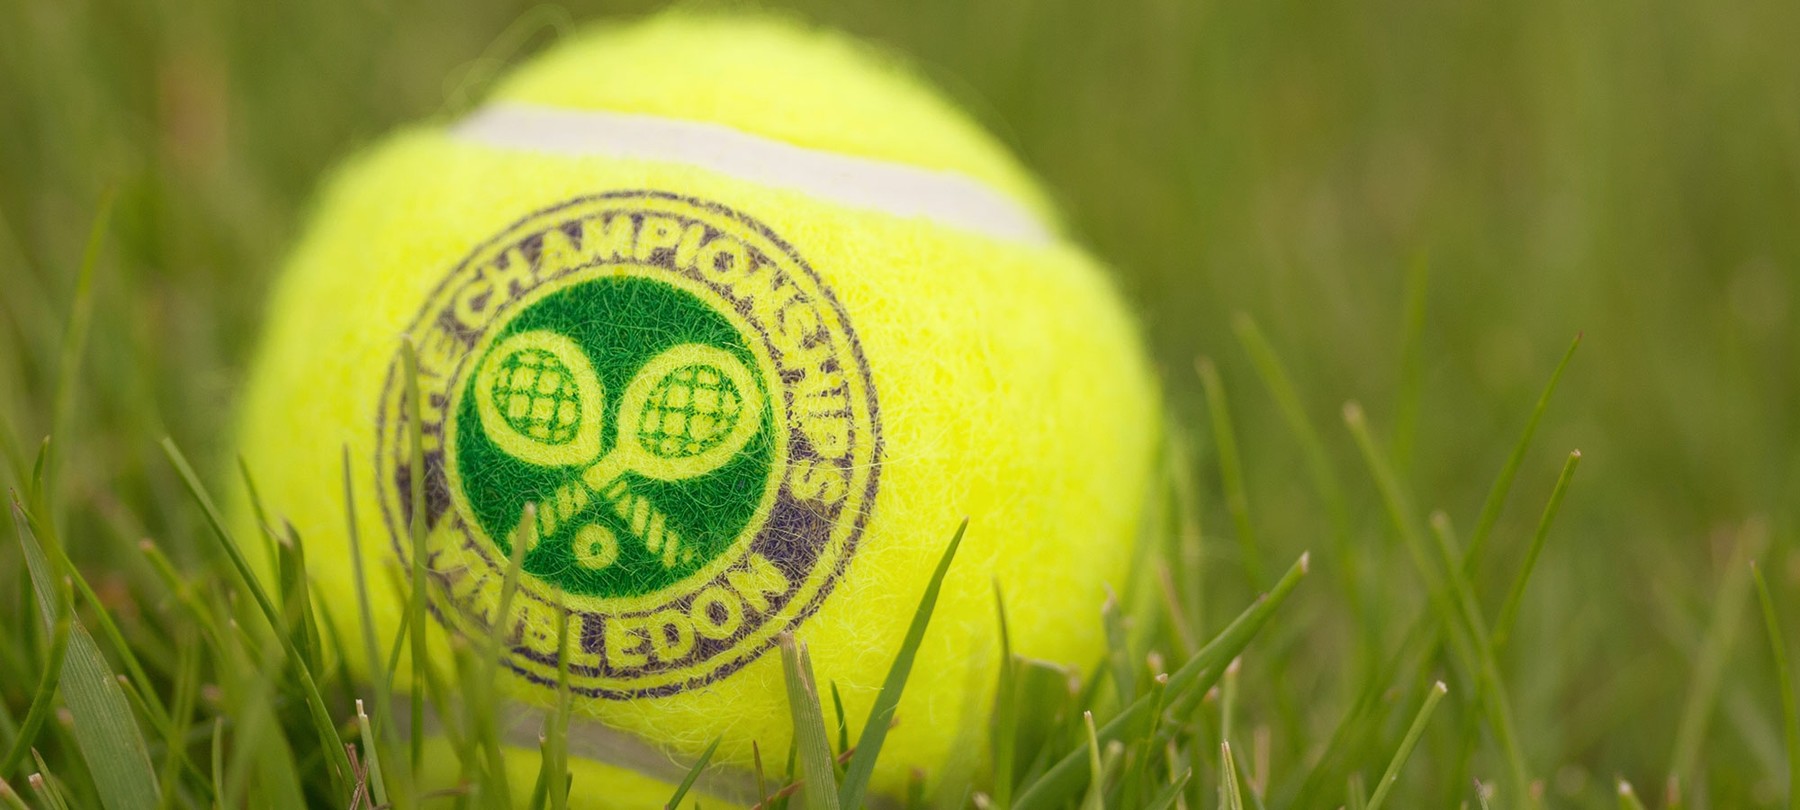 A close up of a tennis ball sitting on grass with Wimbledon written on the ball